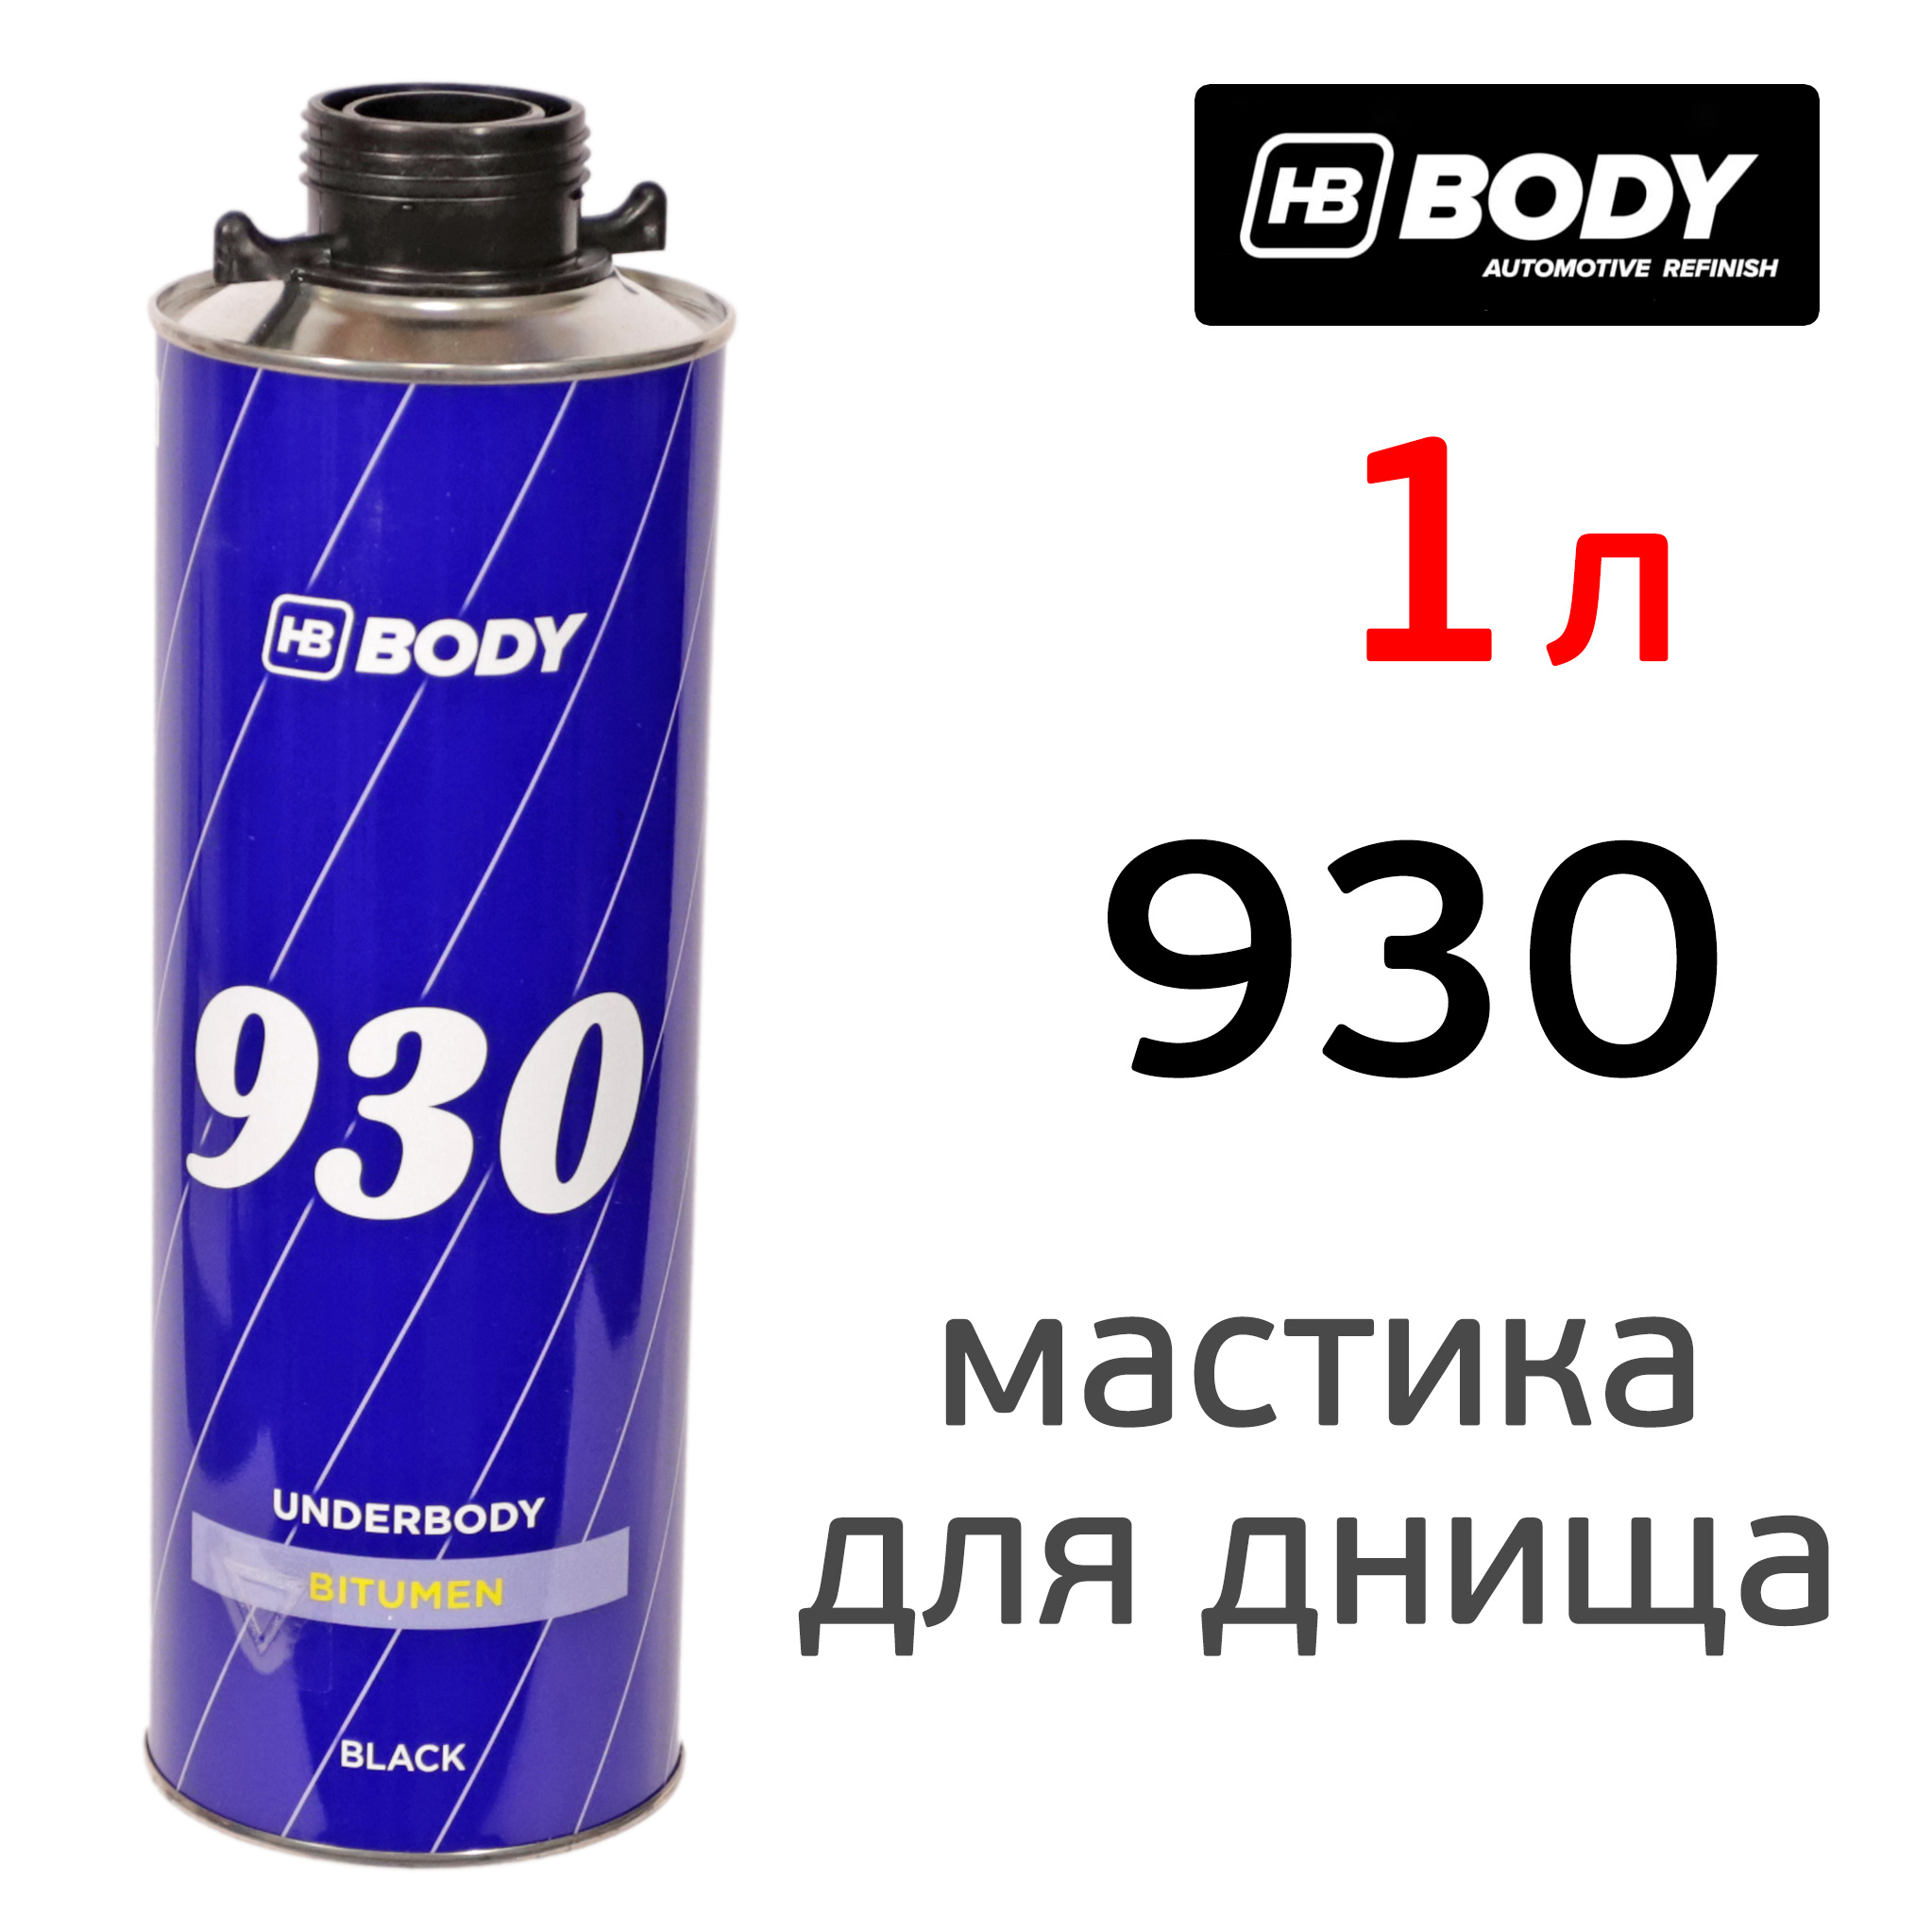    Body 930 -  6